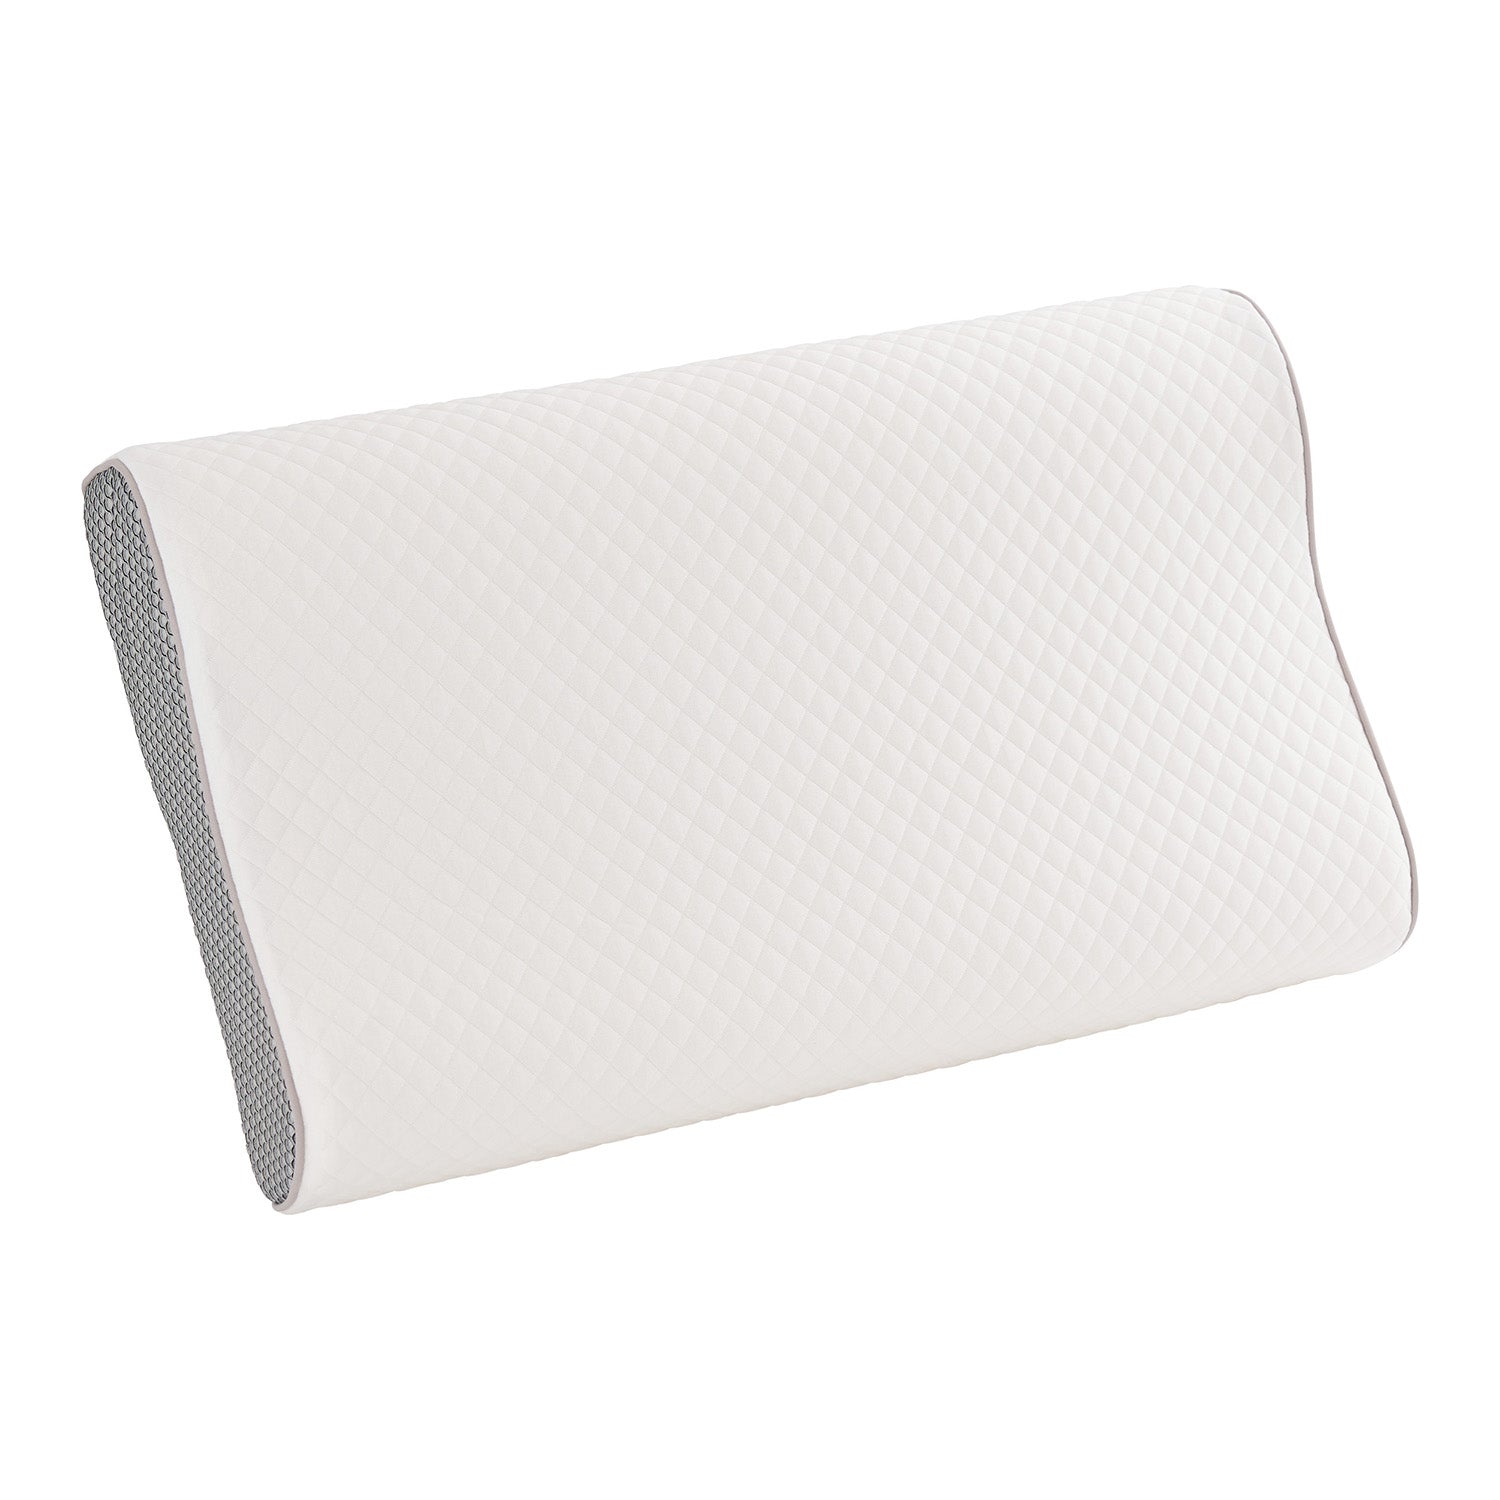 ComfyCozy Memory Foam Pillow Case